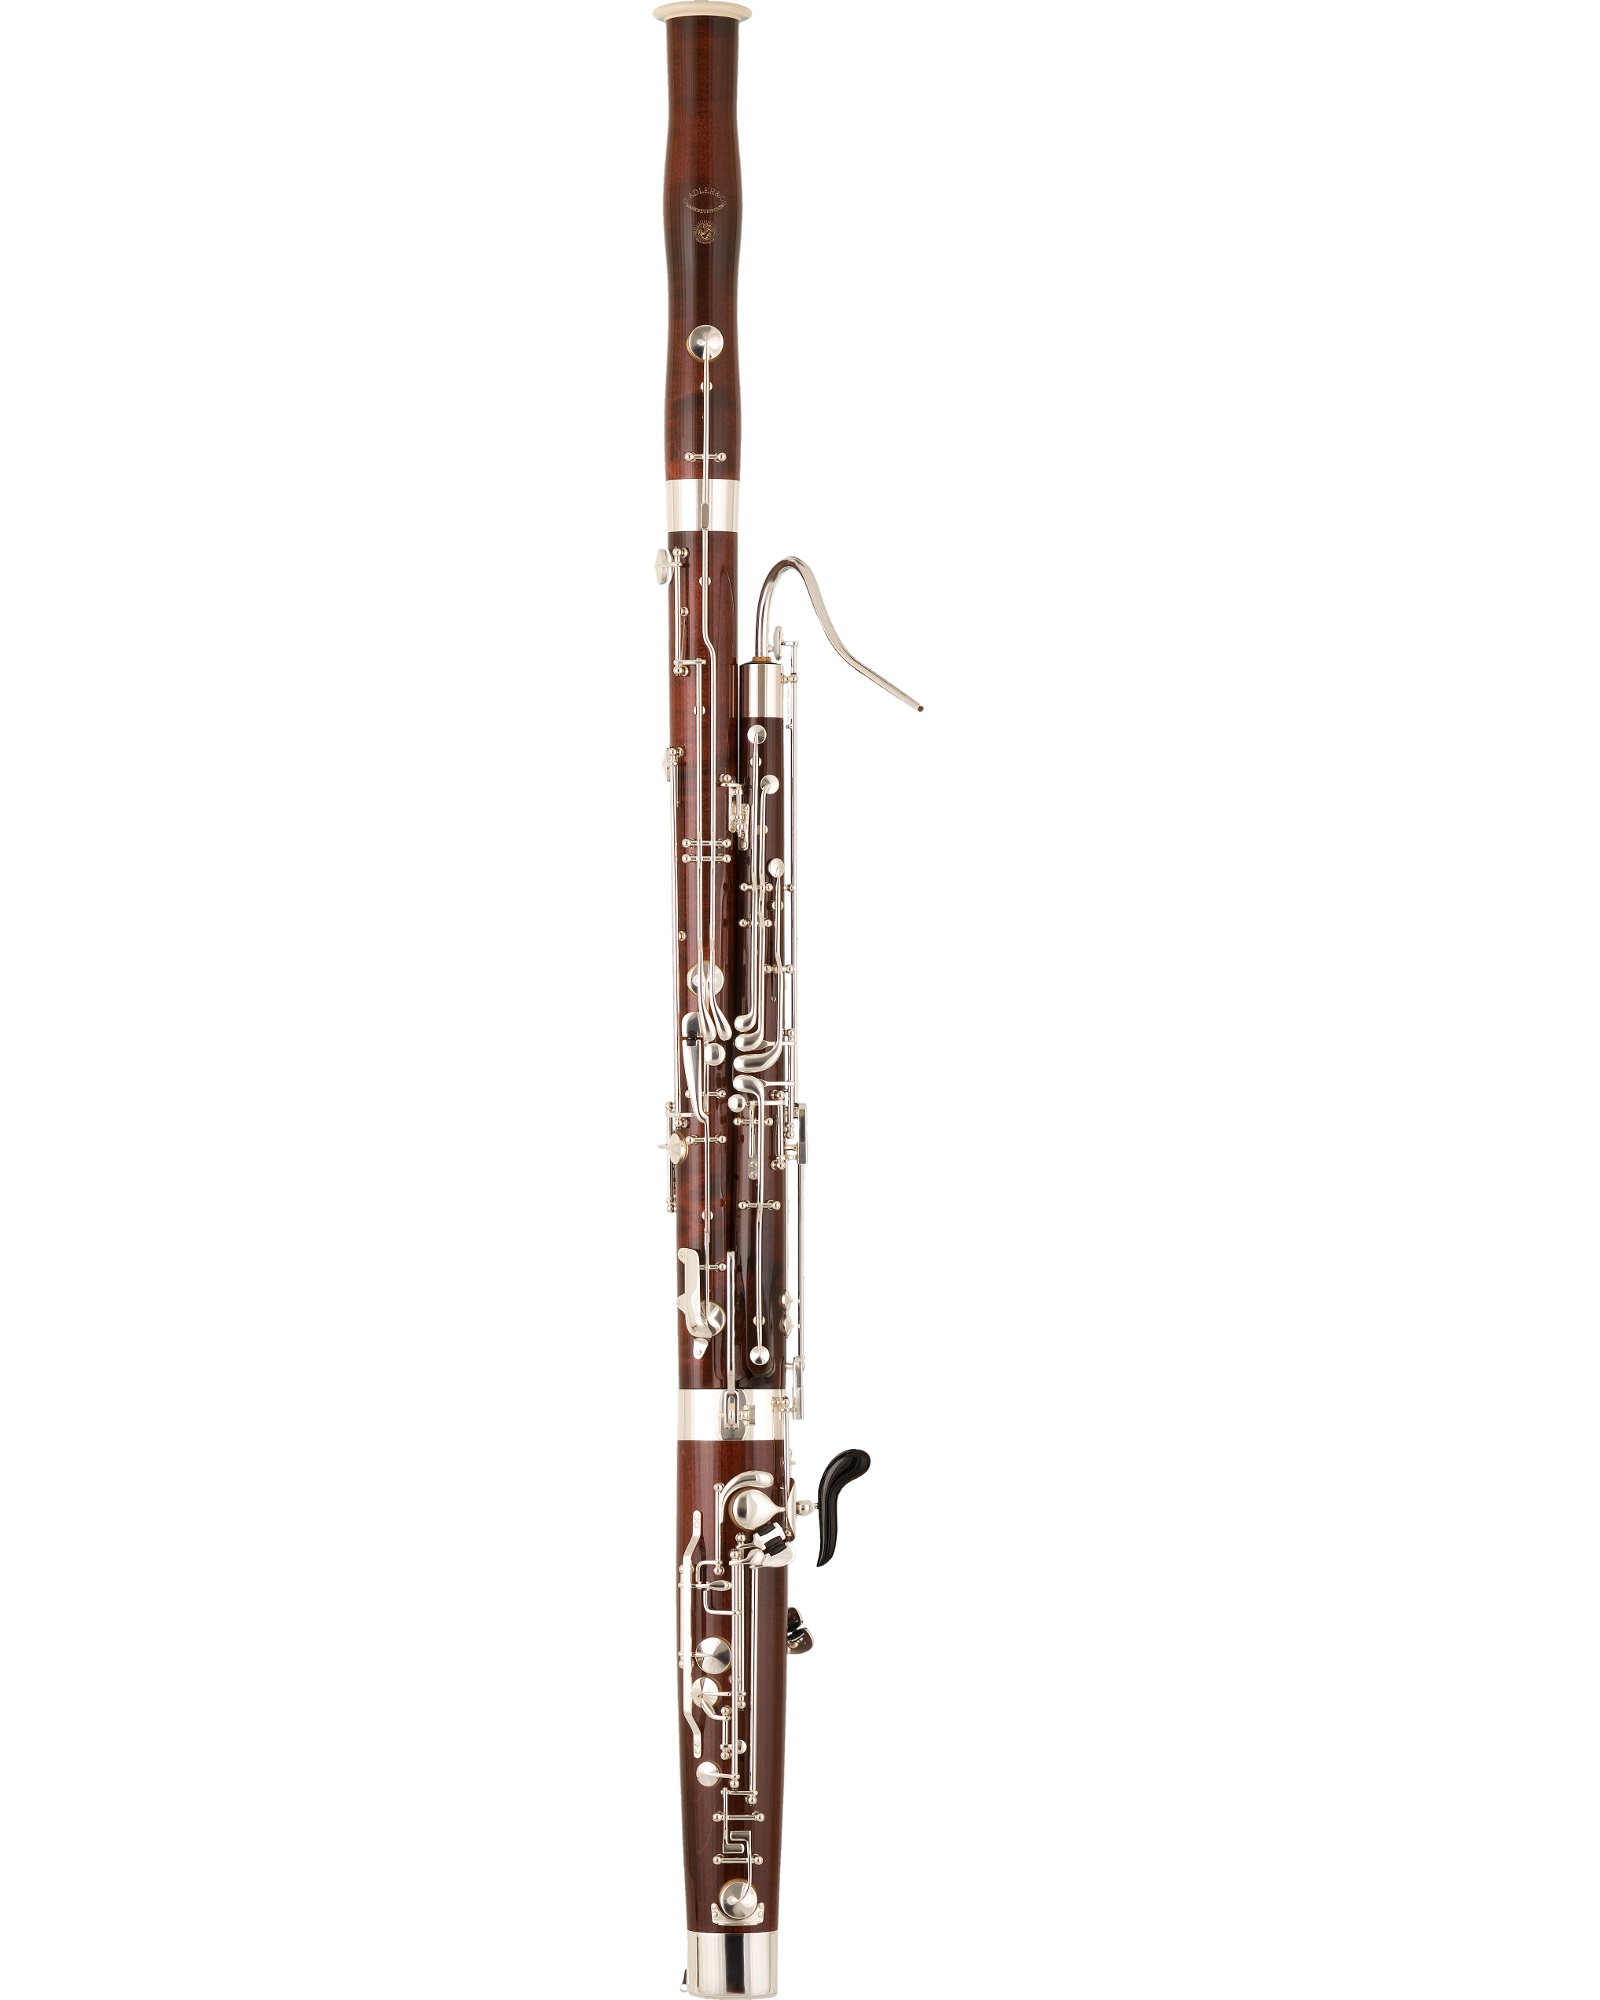 Bassoon Model 1358, by Oscar Adler & Co.